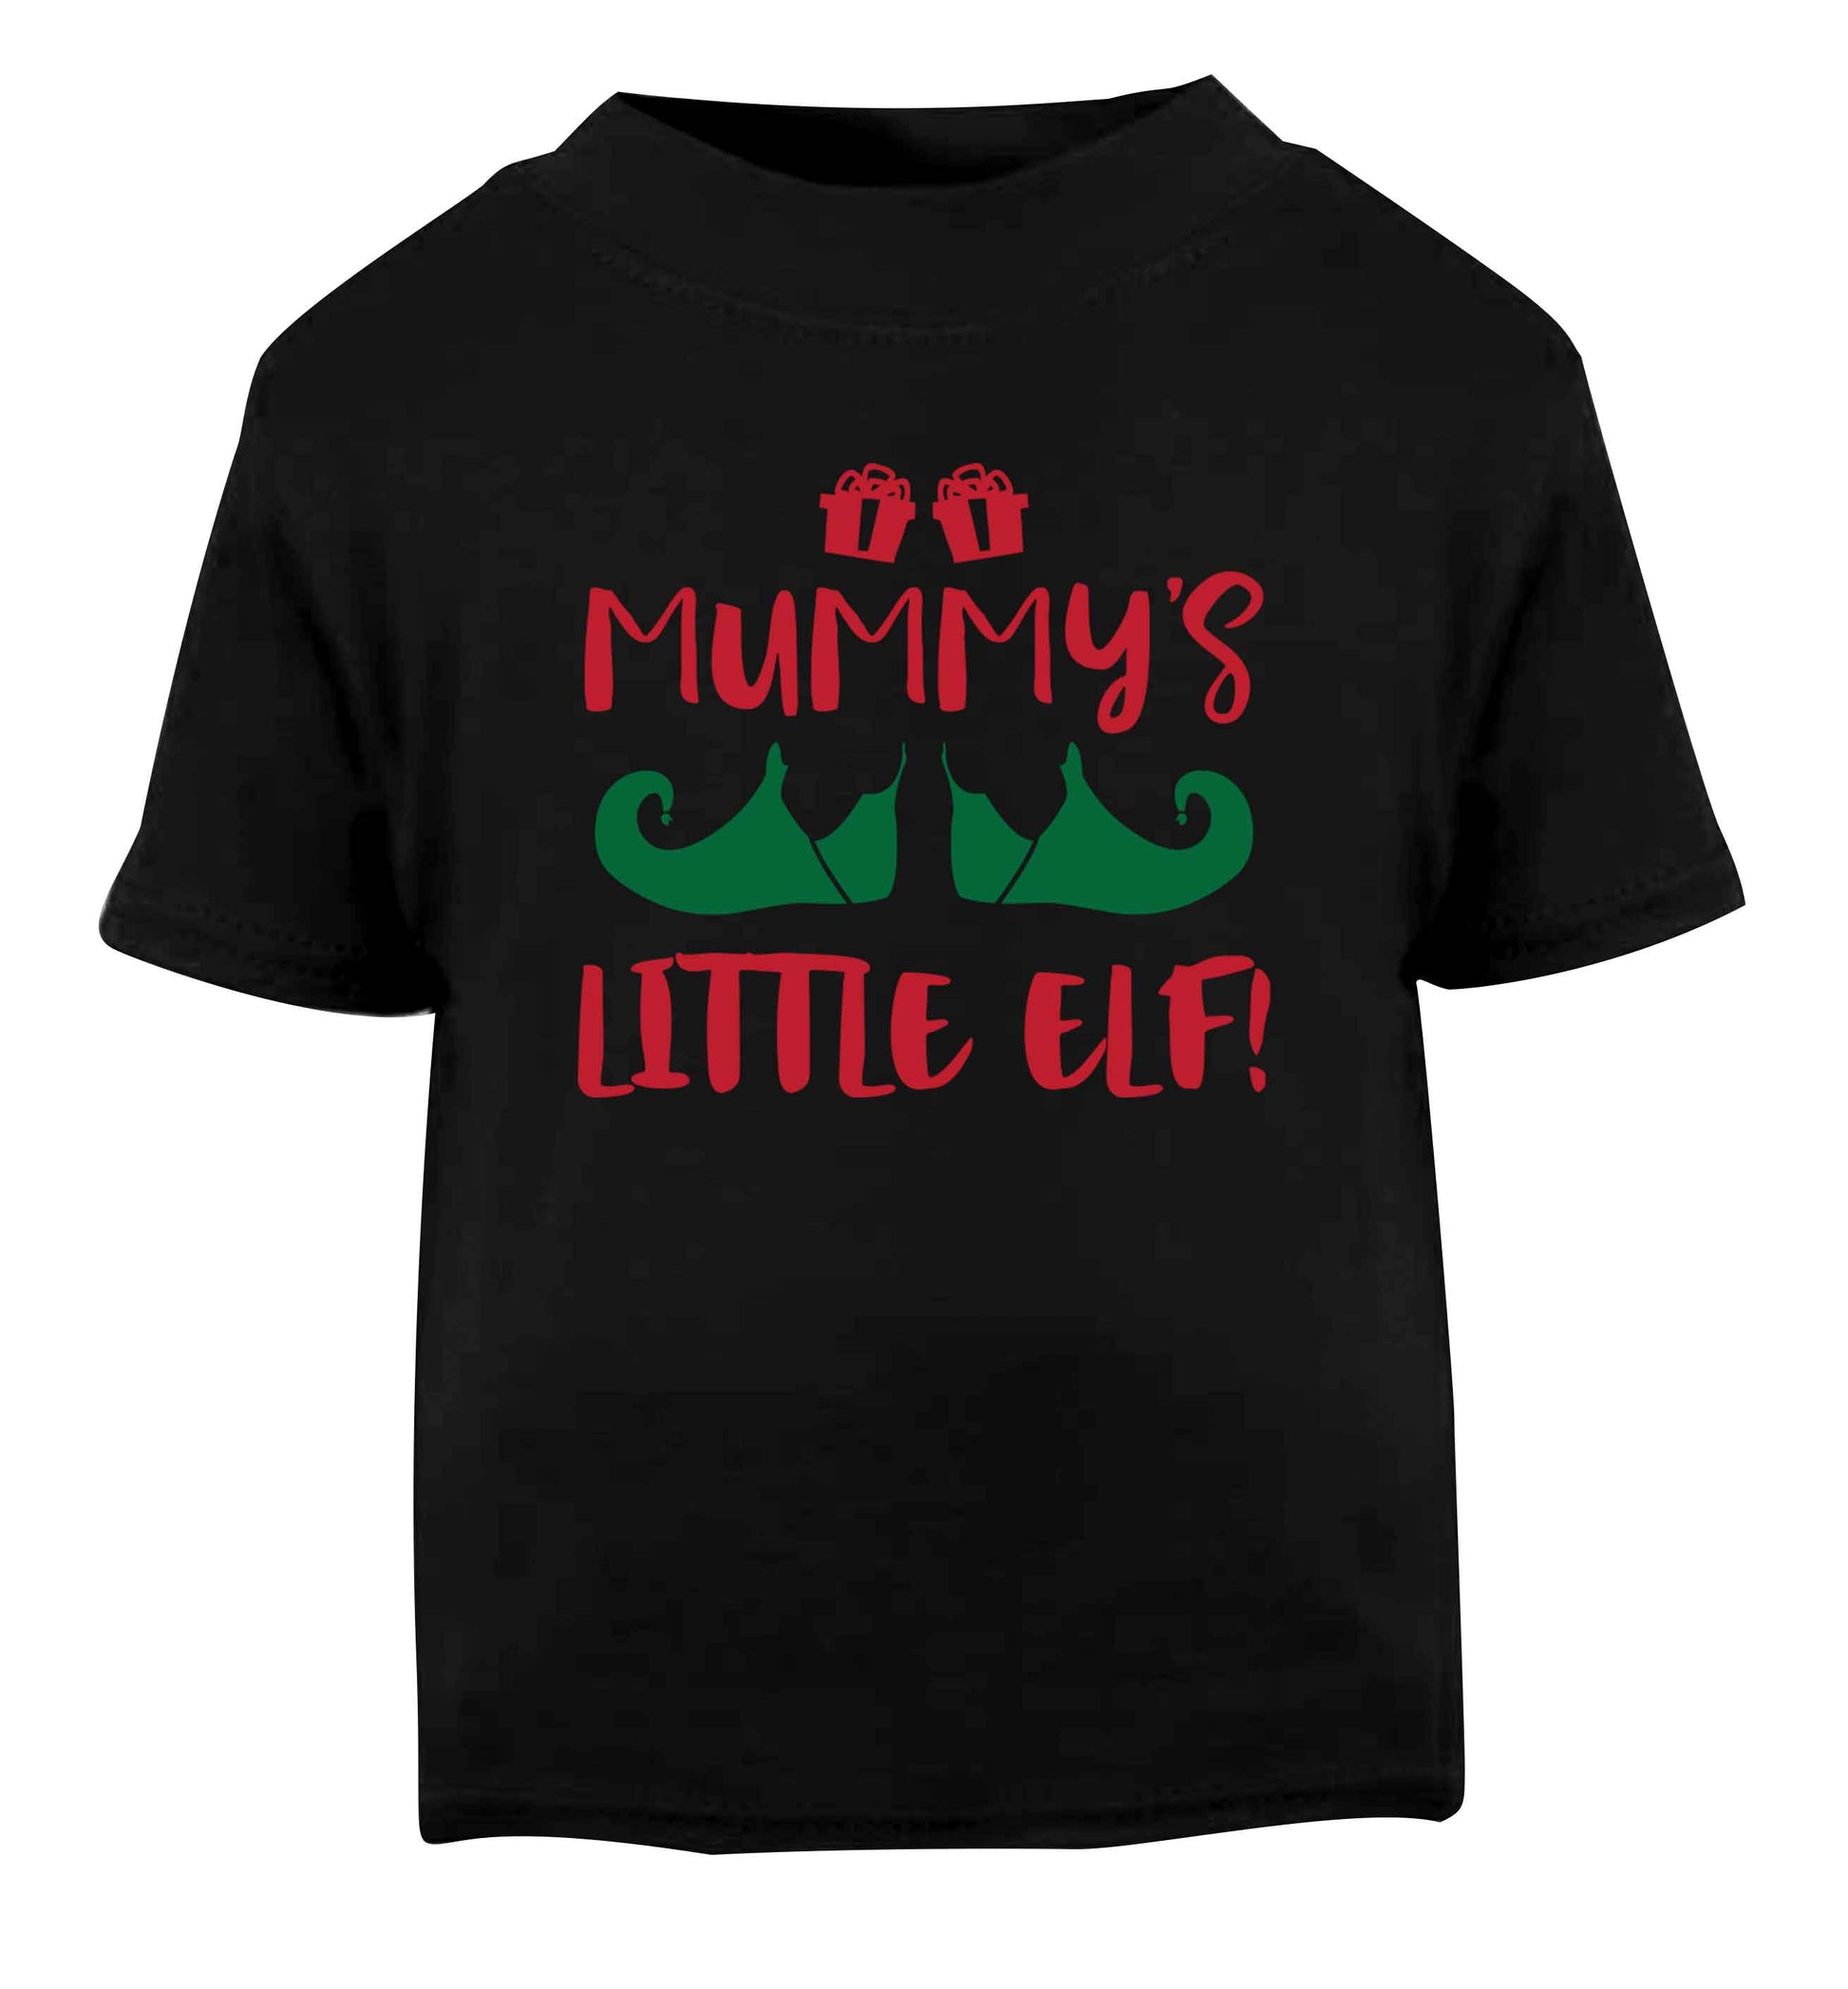 Mummy's little elf Black Baby Toddler Tshirt 2 years